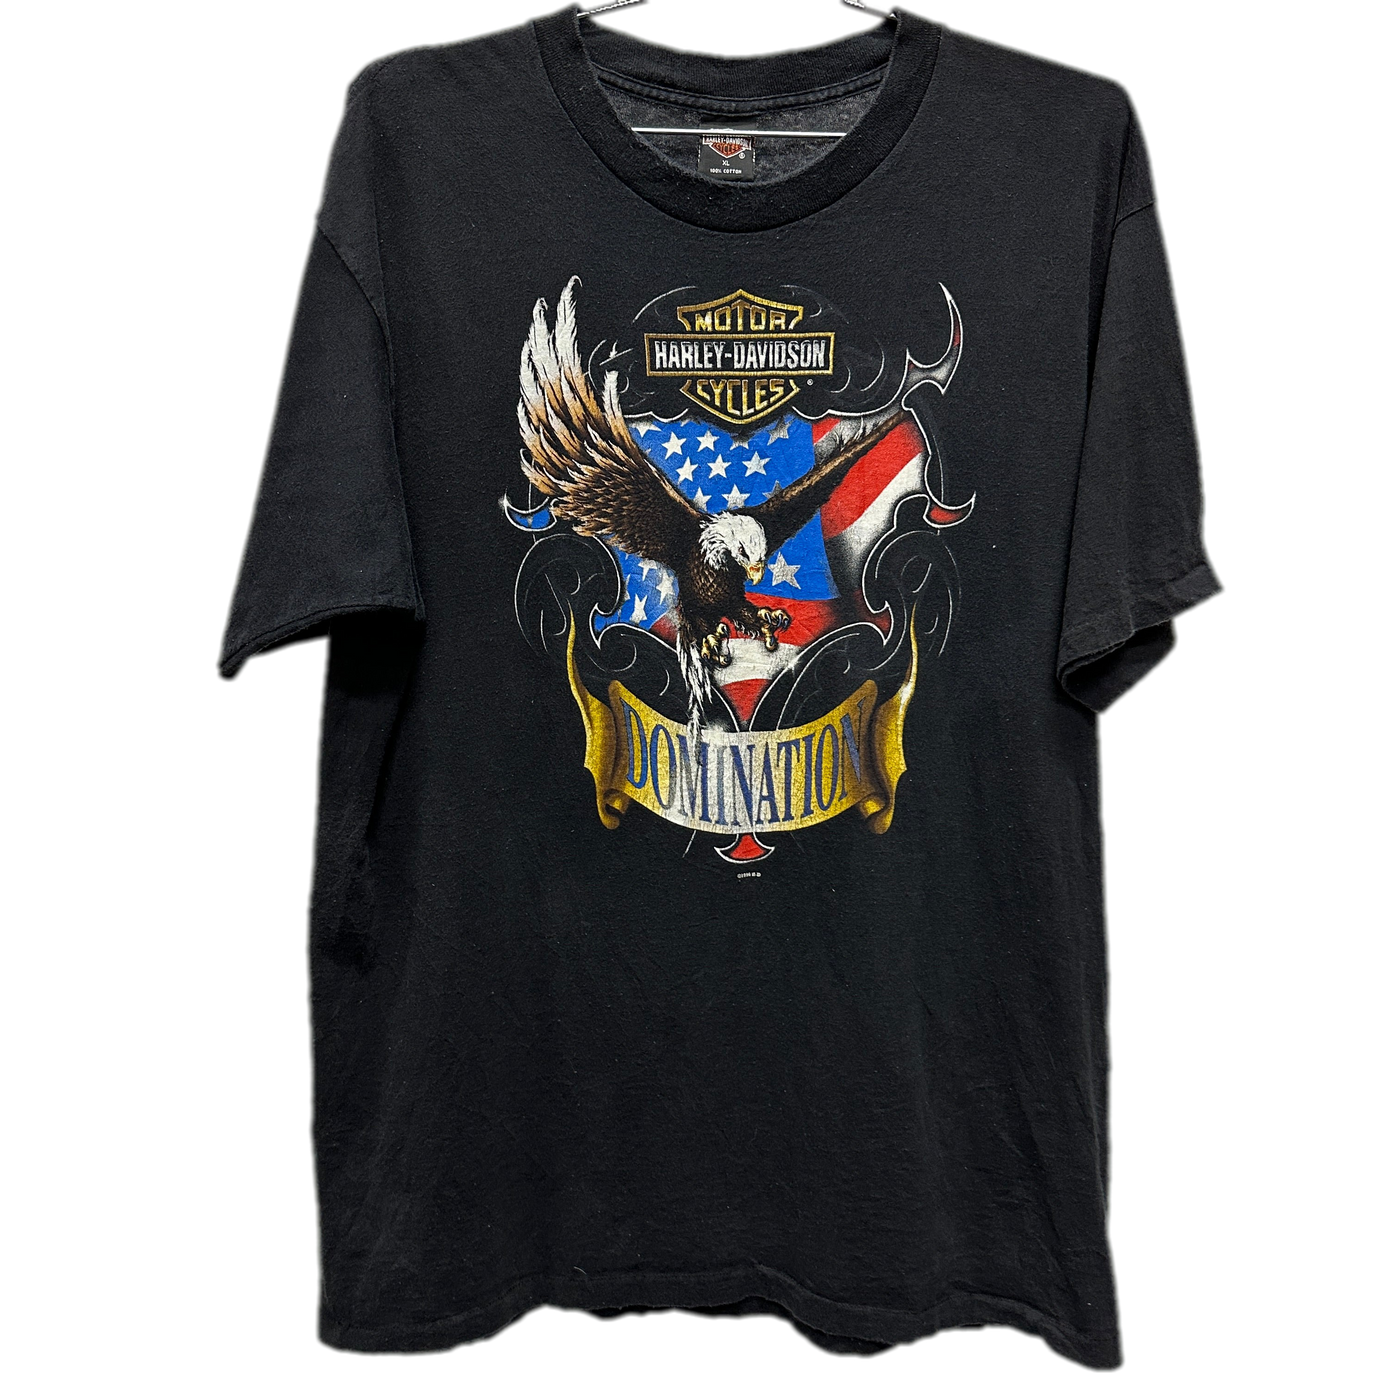 '96 American Eagle Domination Black Harley Davidson T-shirt sz XL